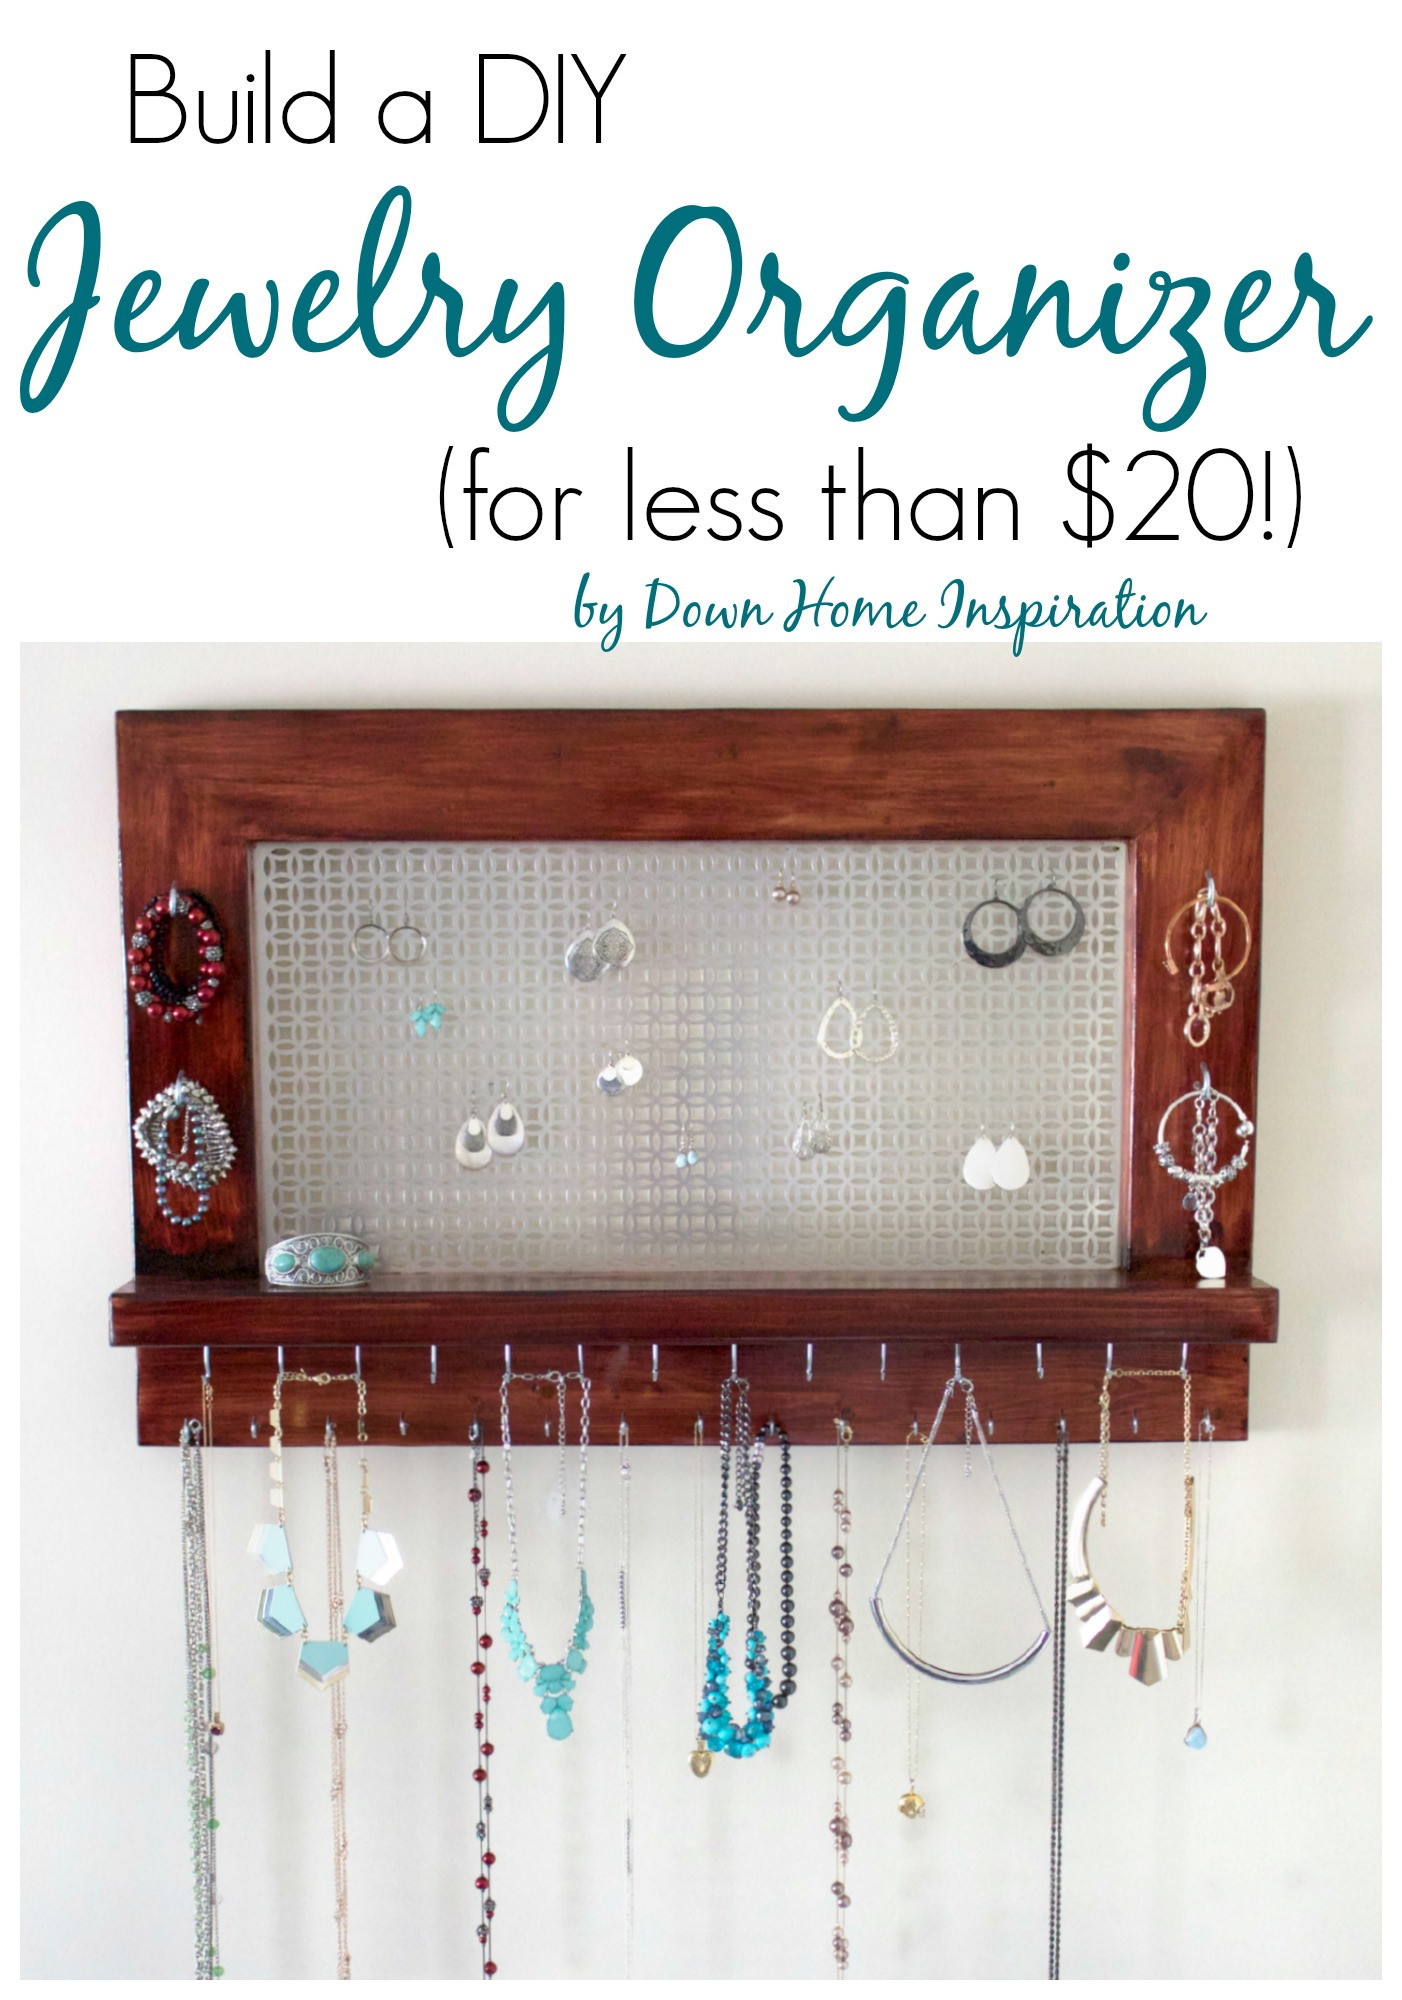 DIY Jewelry Organizer
 Build a Beautiful DIY Jewelry Organizer for less than $20